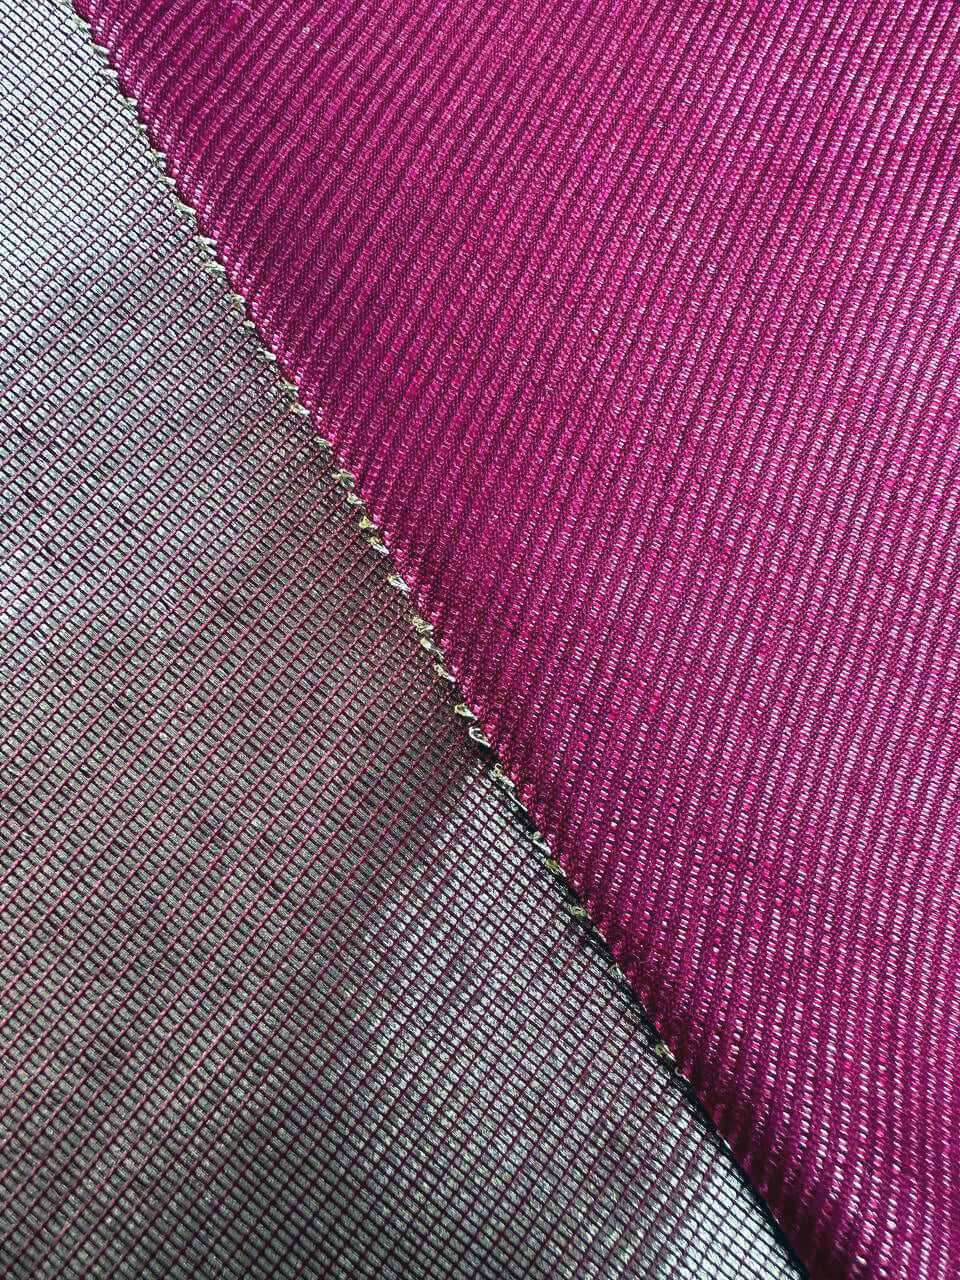 Geometric Triangular Bands (Red) handwoven silk songket shawl textile